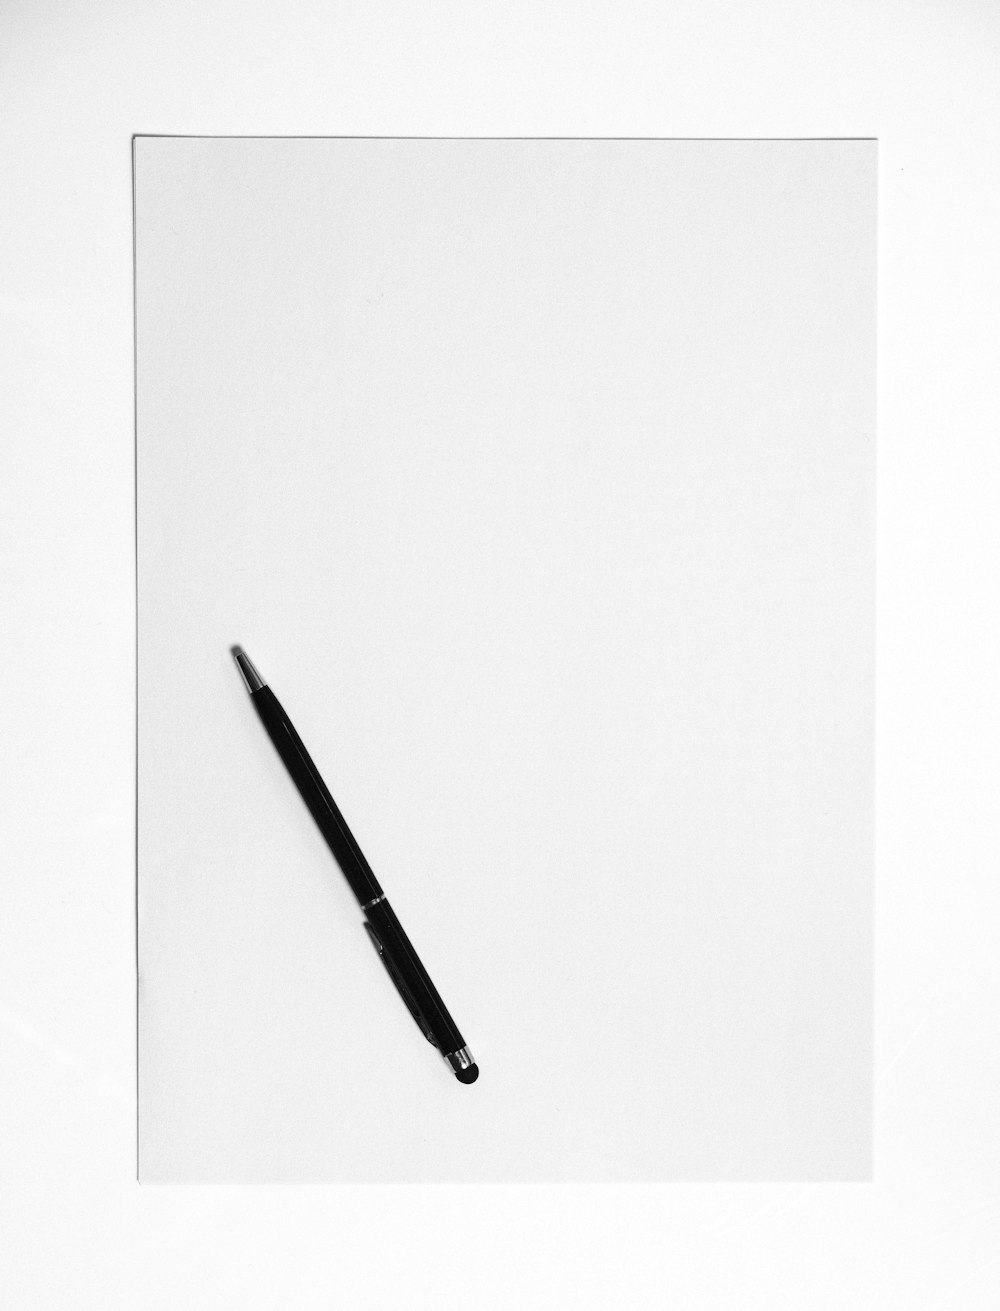 caneta preta na superfície branca